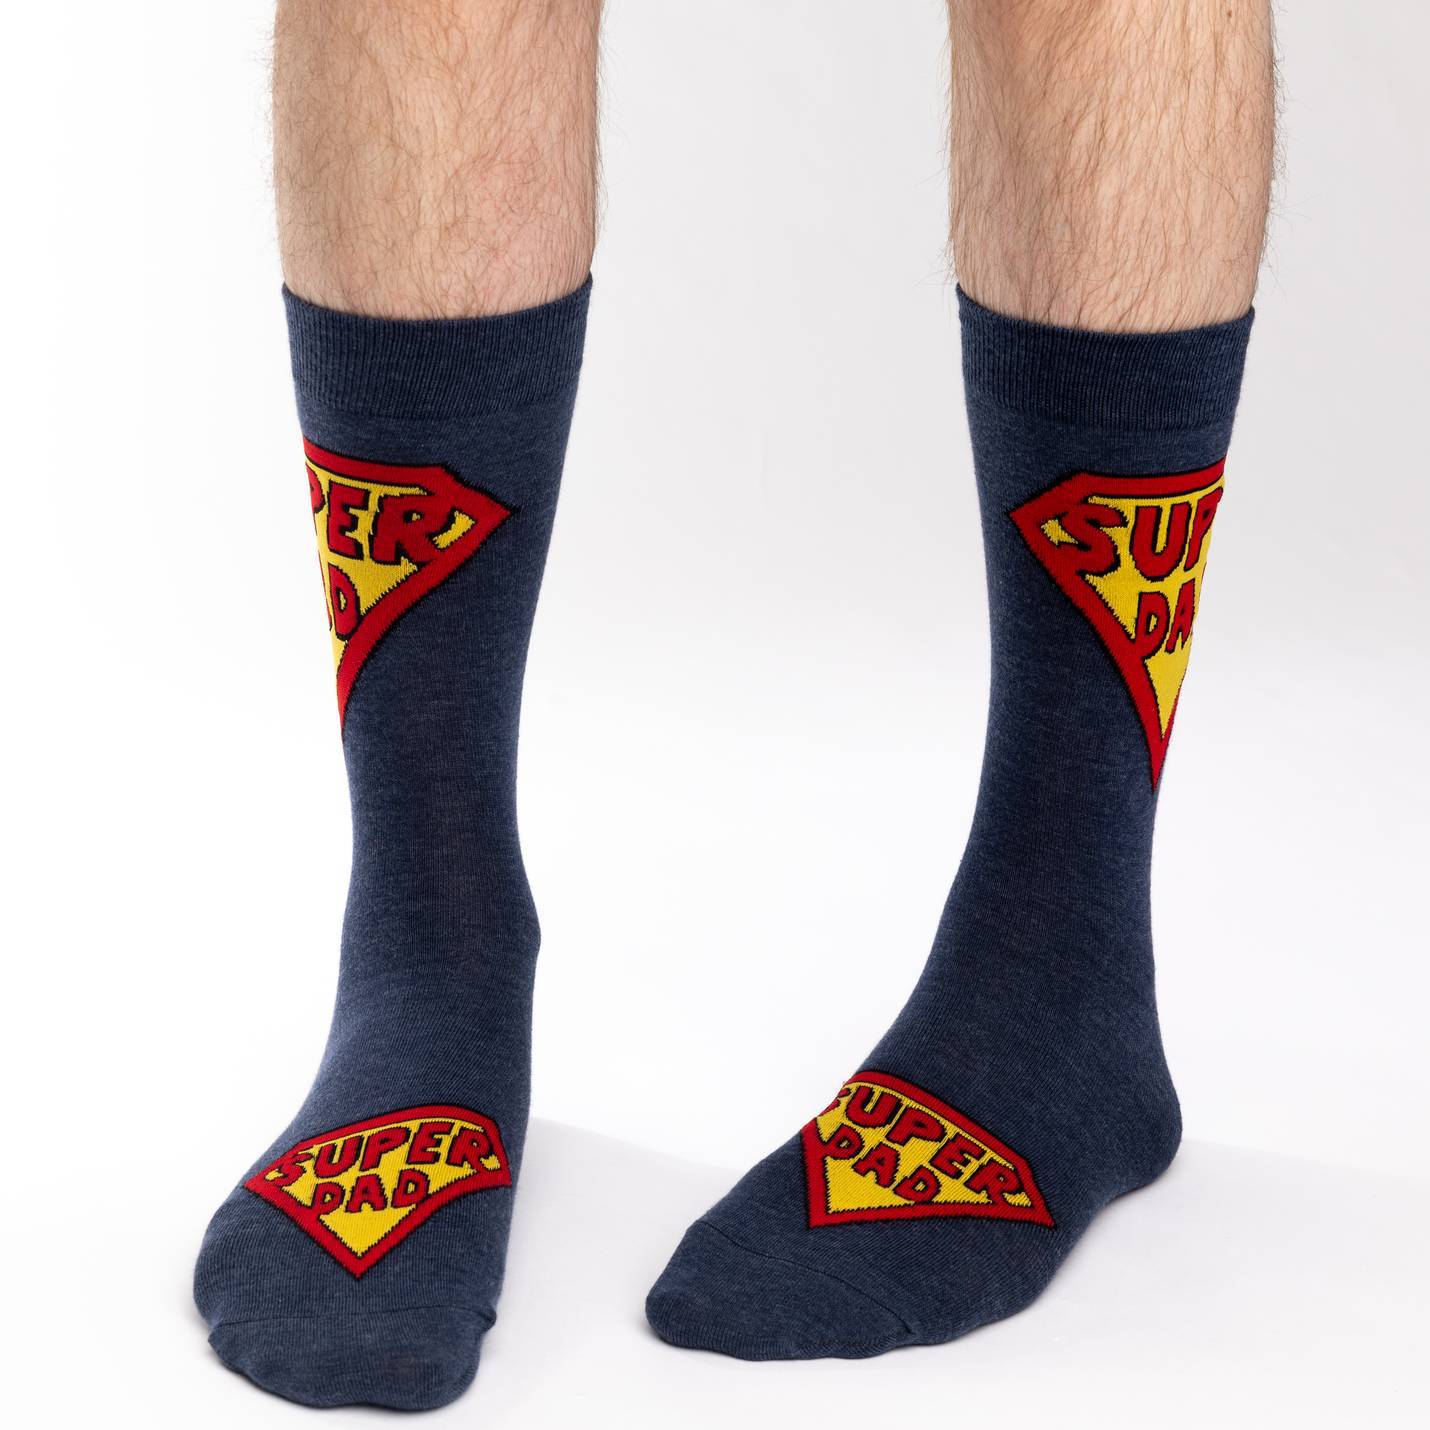 Socks - Men's Crew - Super Dad